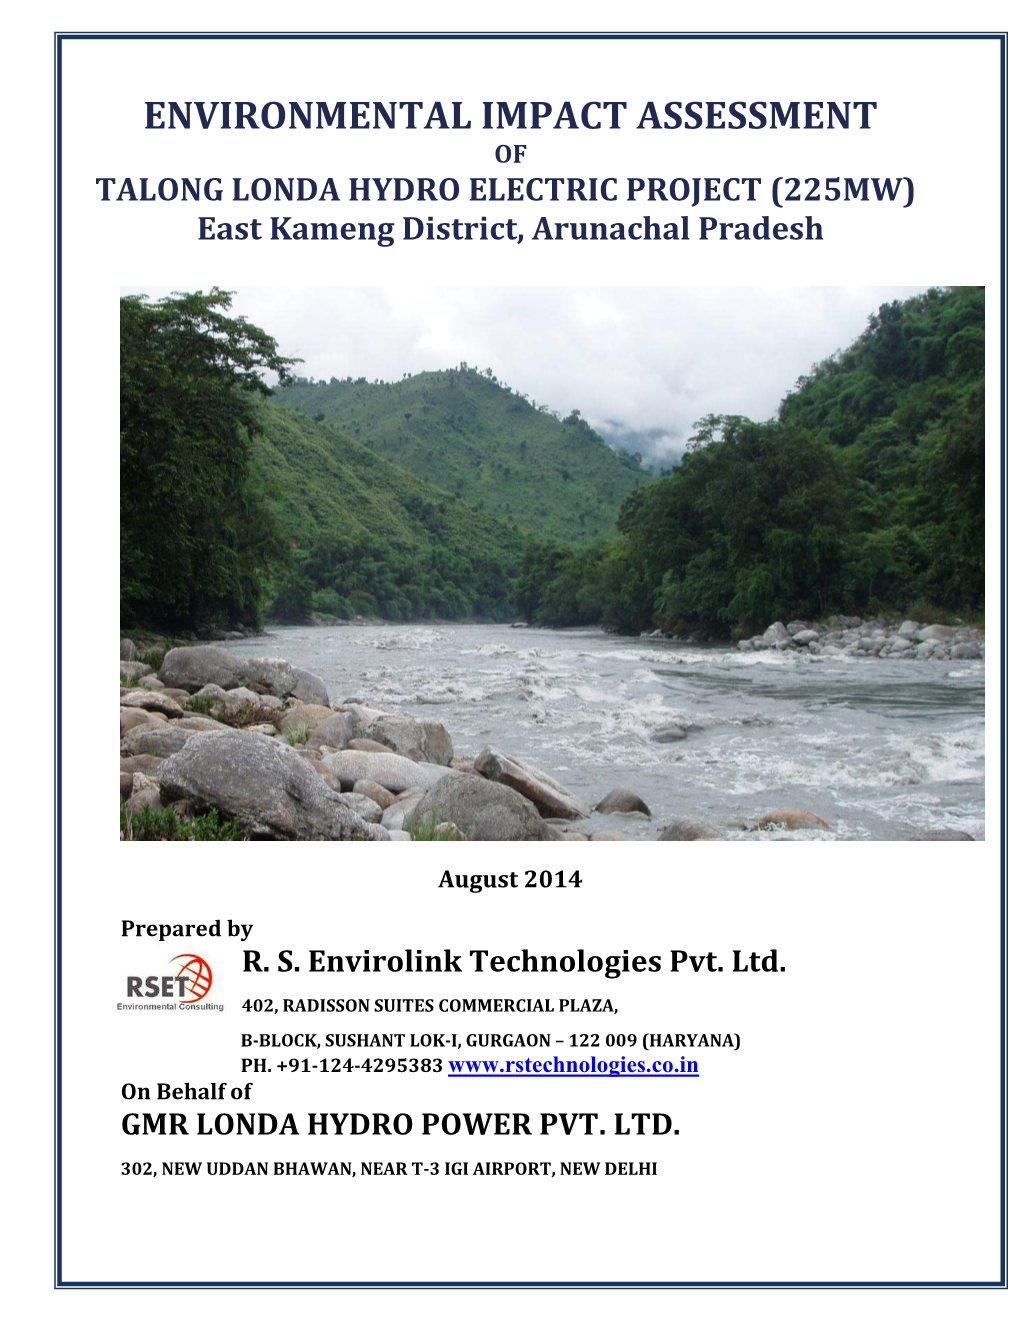 ENVIRONMENTAL IMPACT ASSESSMENT of TALONG LONDA HYDRO ELECTRIC PROJECT (225MW) East Kameng District, Arunachal Pradesh